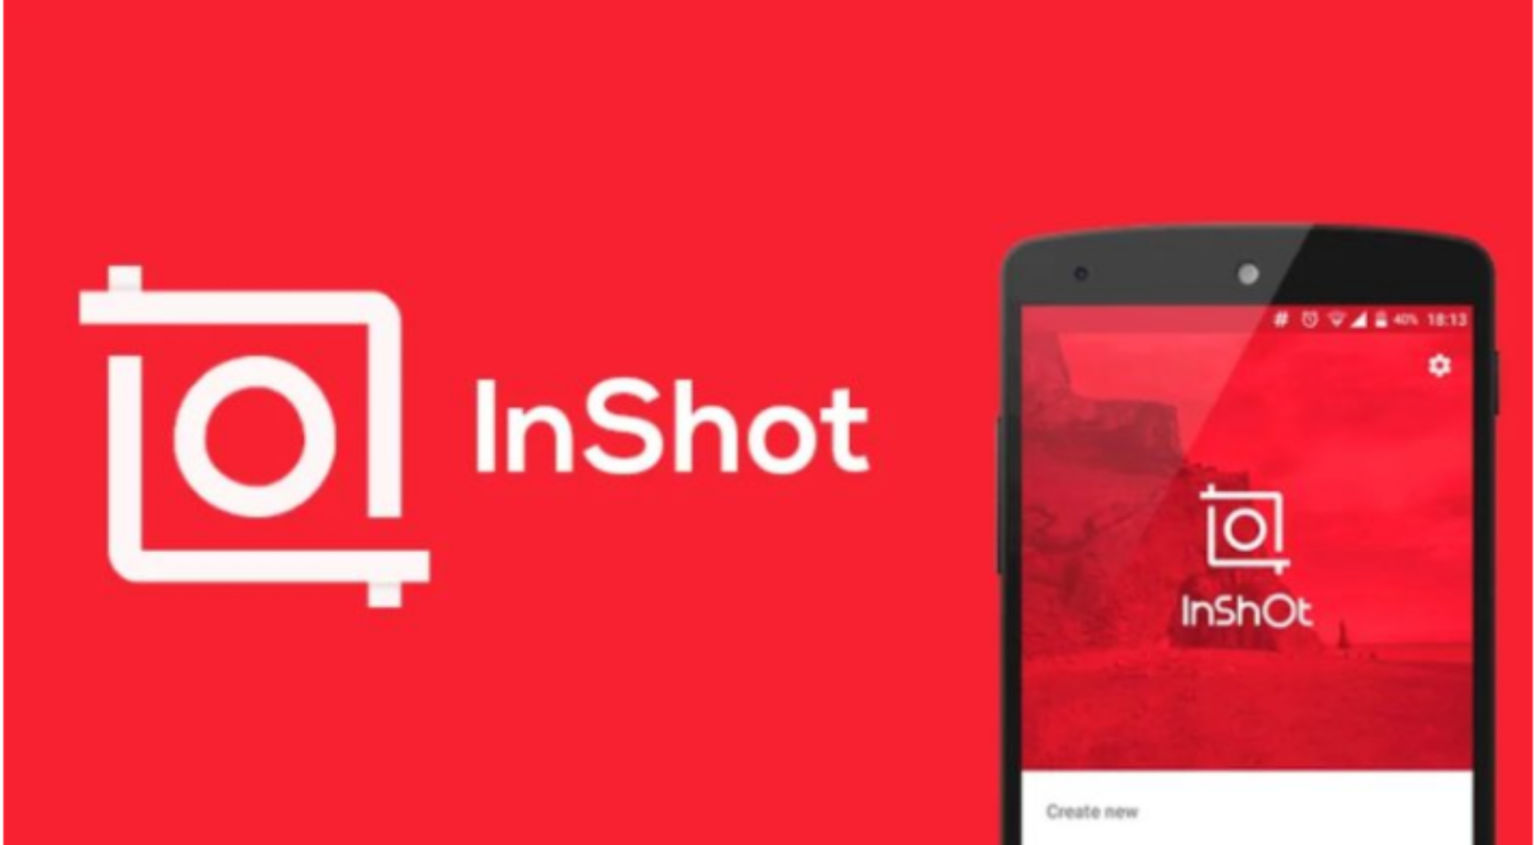 Download করে নিন ২৫০০ টাকা দামের Inshot-এর Latest Pro Version Free তে। Android-এর জন্য সেরা Photo/Video Editing+Photo Collaging App